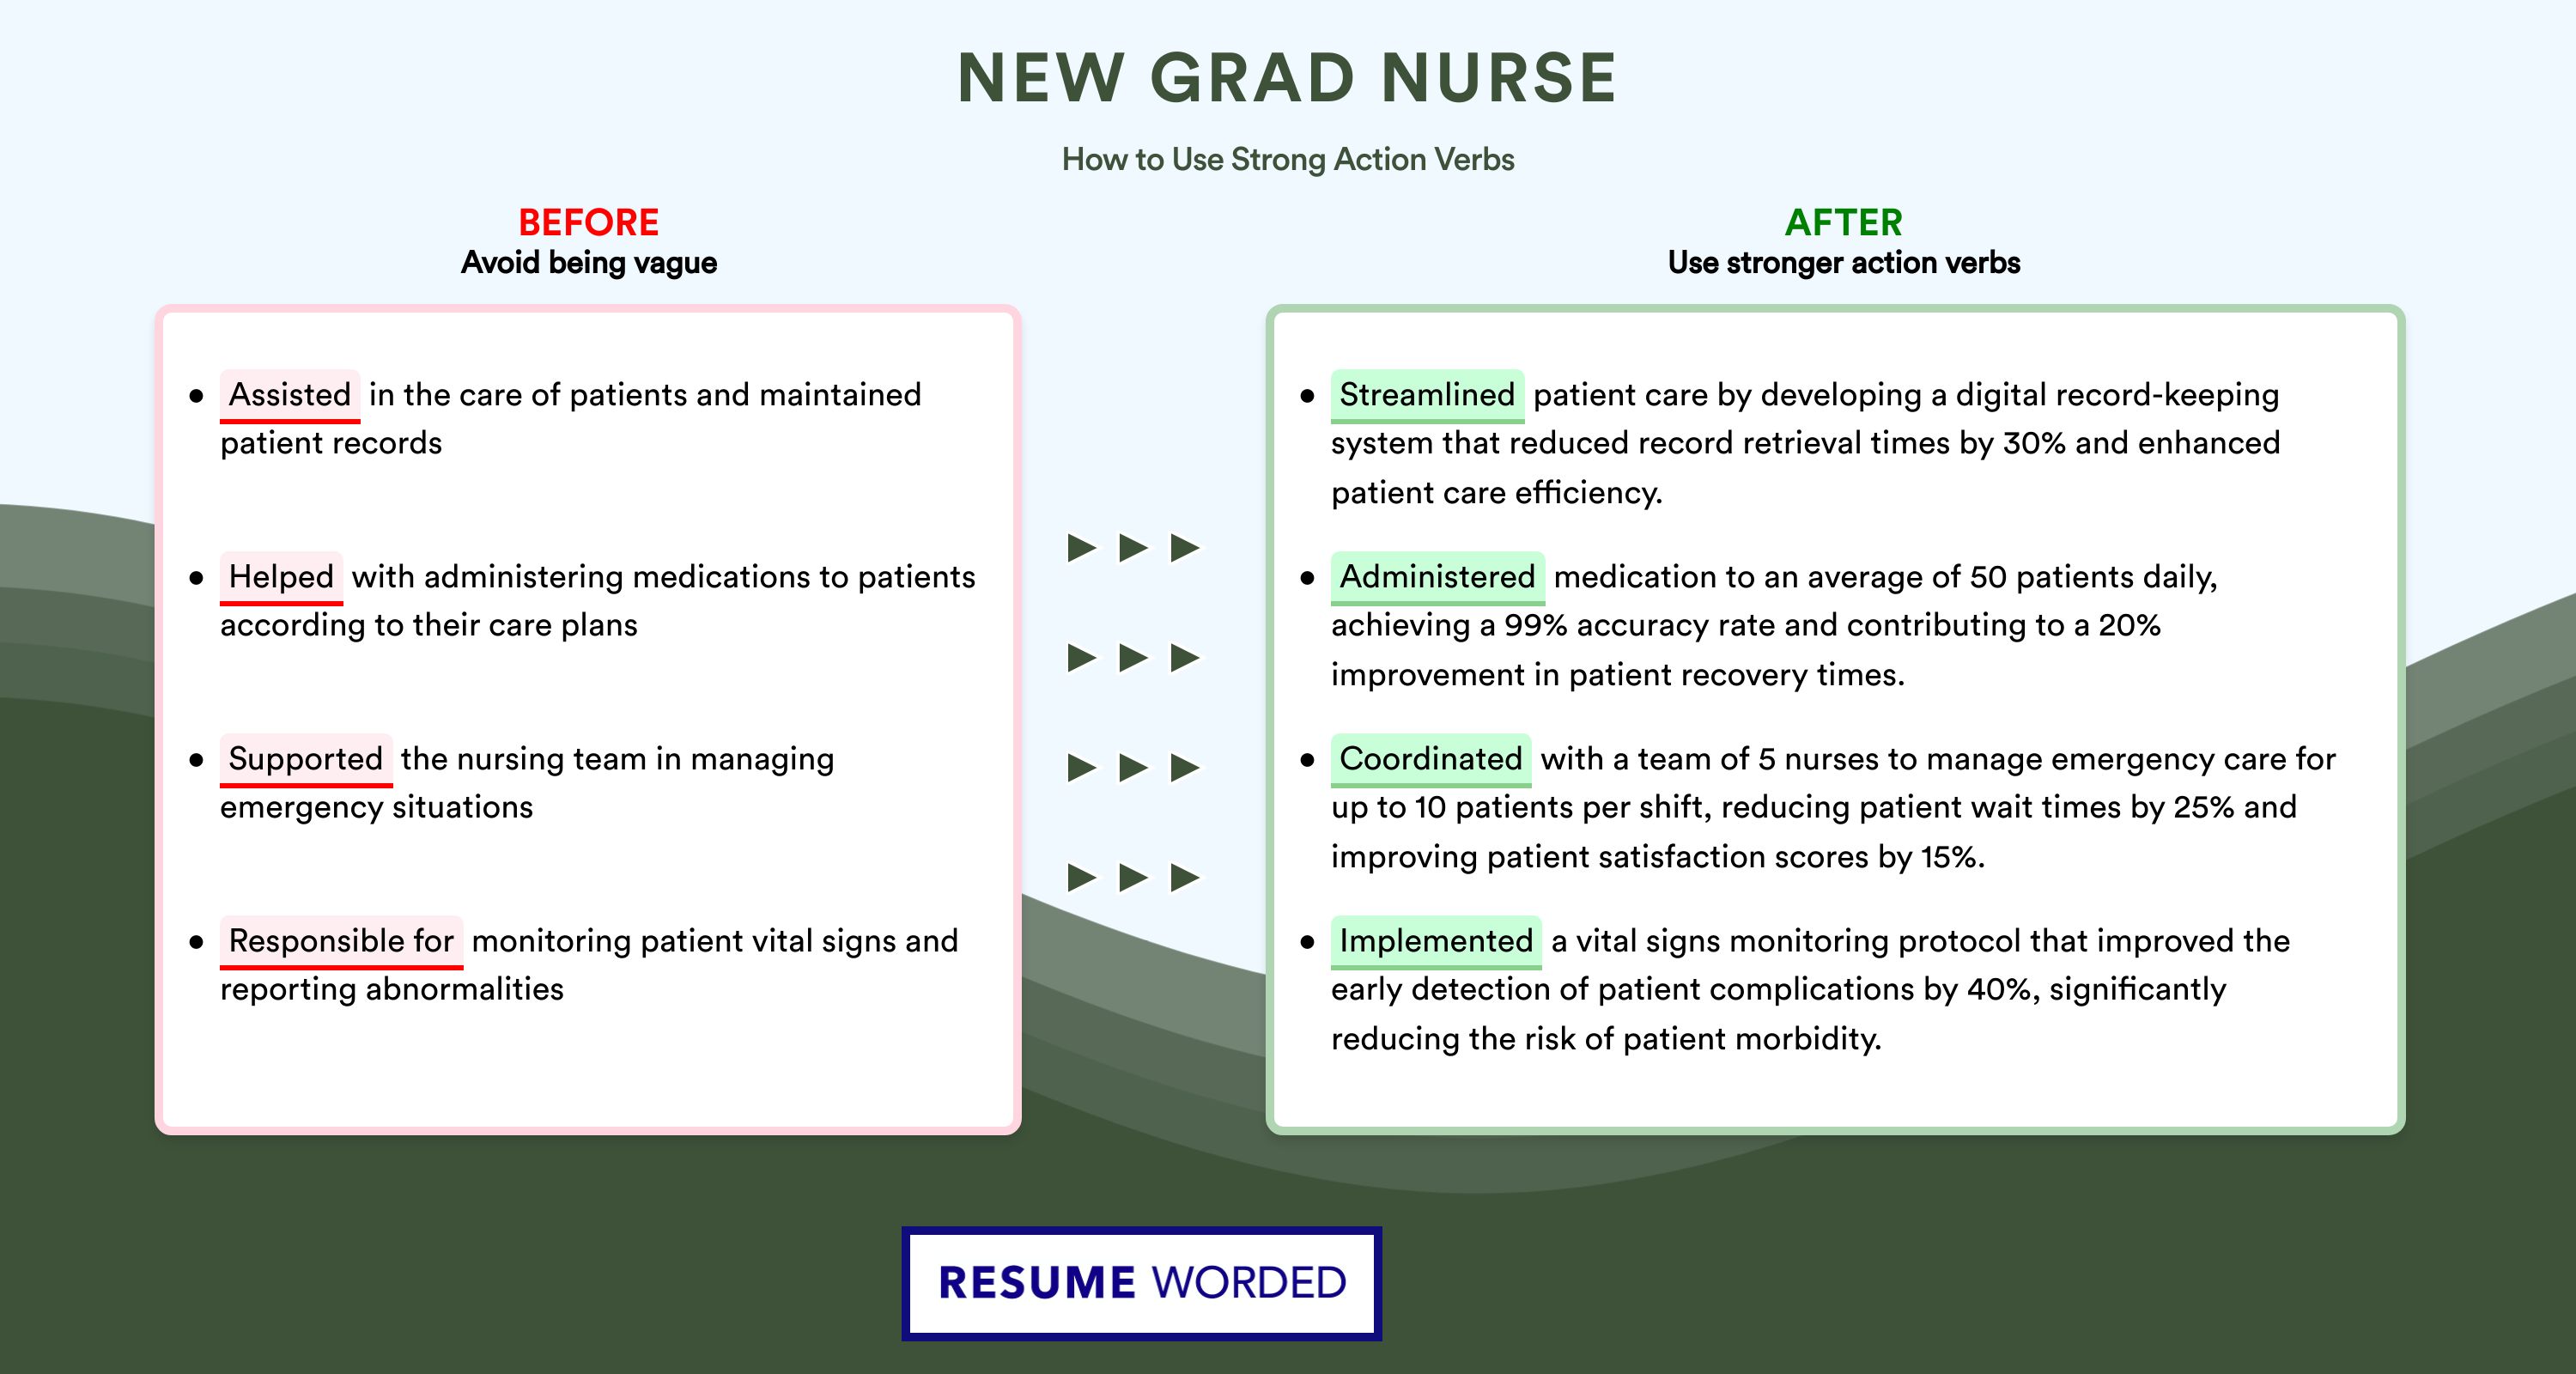 Action Verbs for New Grad Nurse